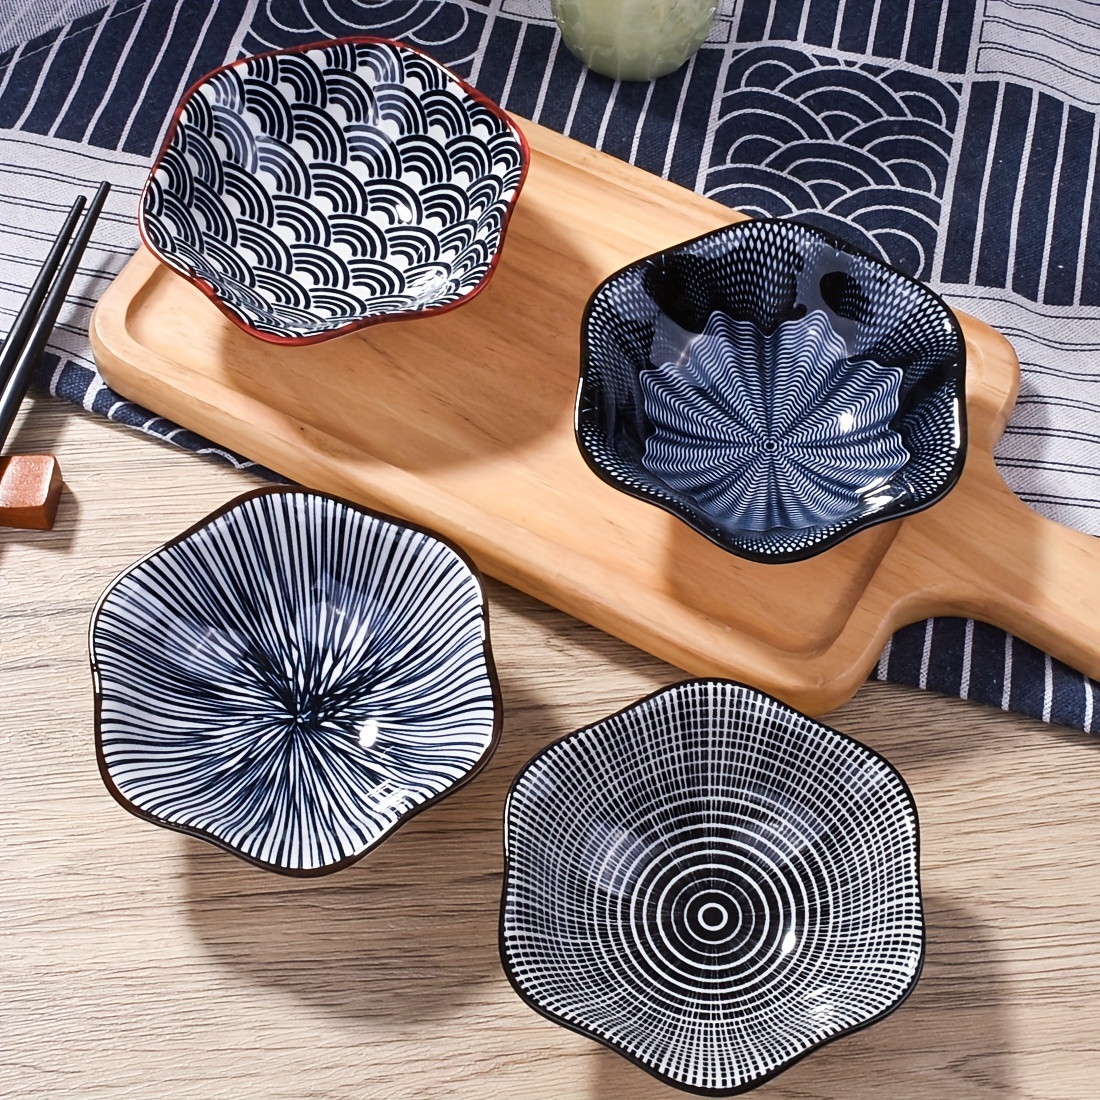 4 Pcs Japanese Sushi Plate Dinnerware Set Black With Plum Bl